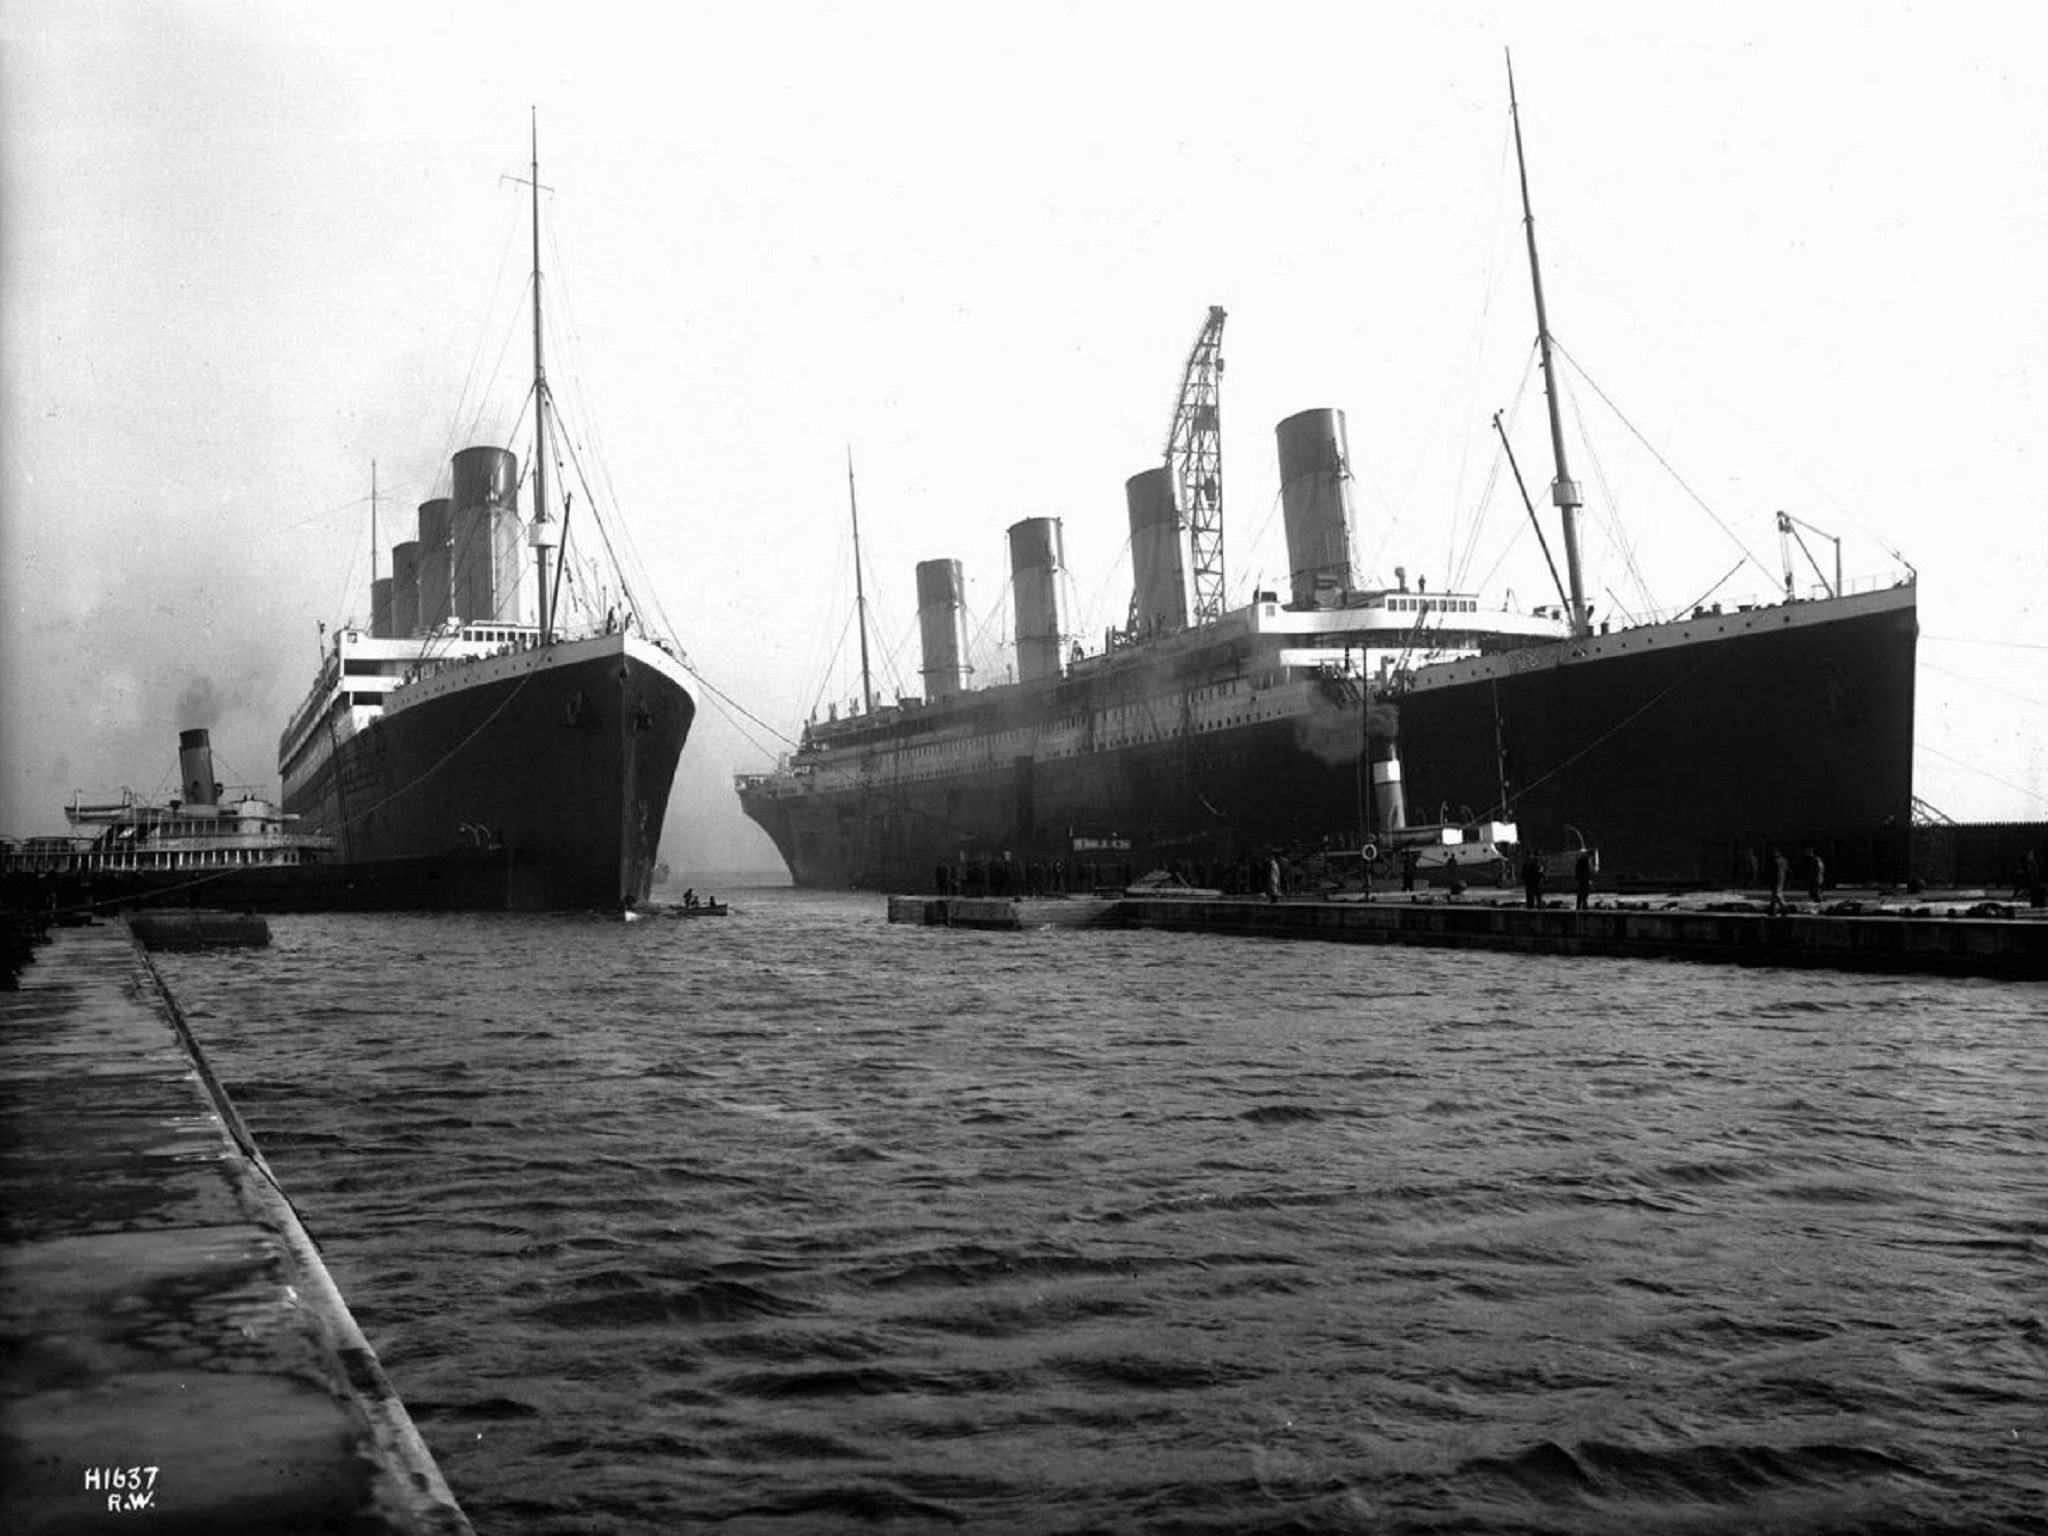 Titanic 2' shipreck could be divers' theme park